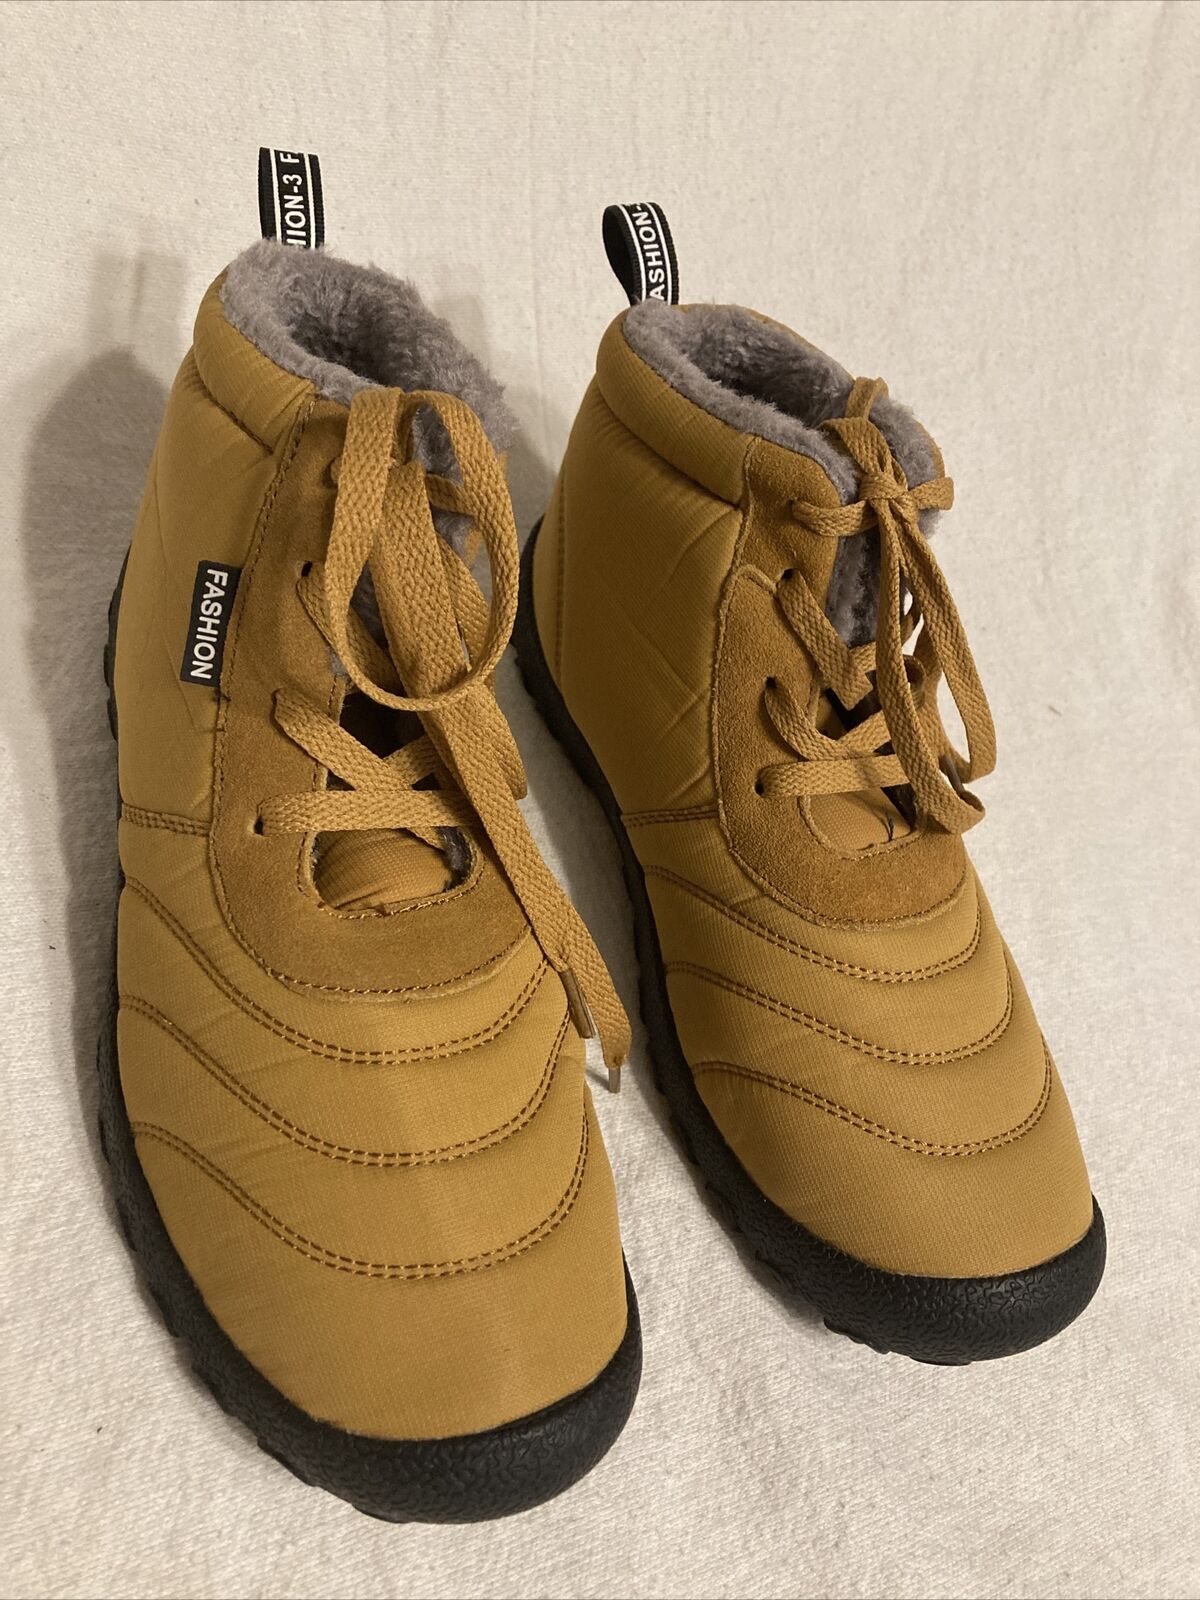 Fashion-3 Fleece Lined Winter Mid-Top, Gold Boot/shoe Size 40 Women’s 9  Mens 7